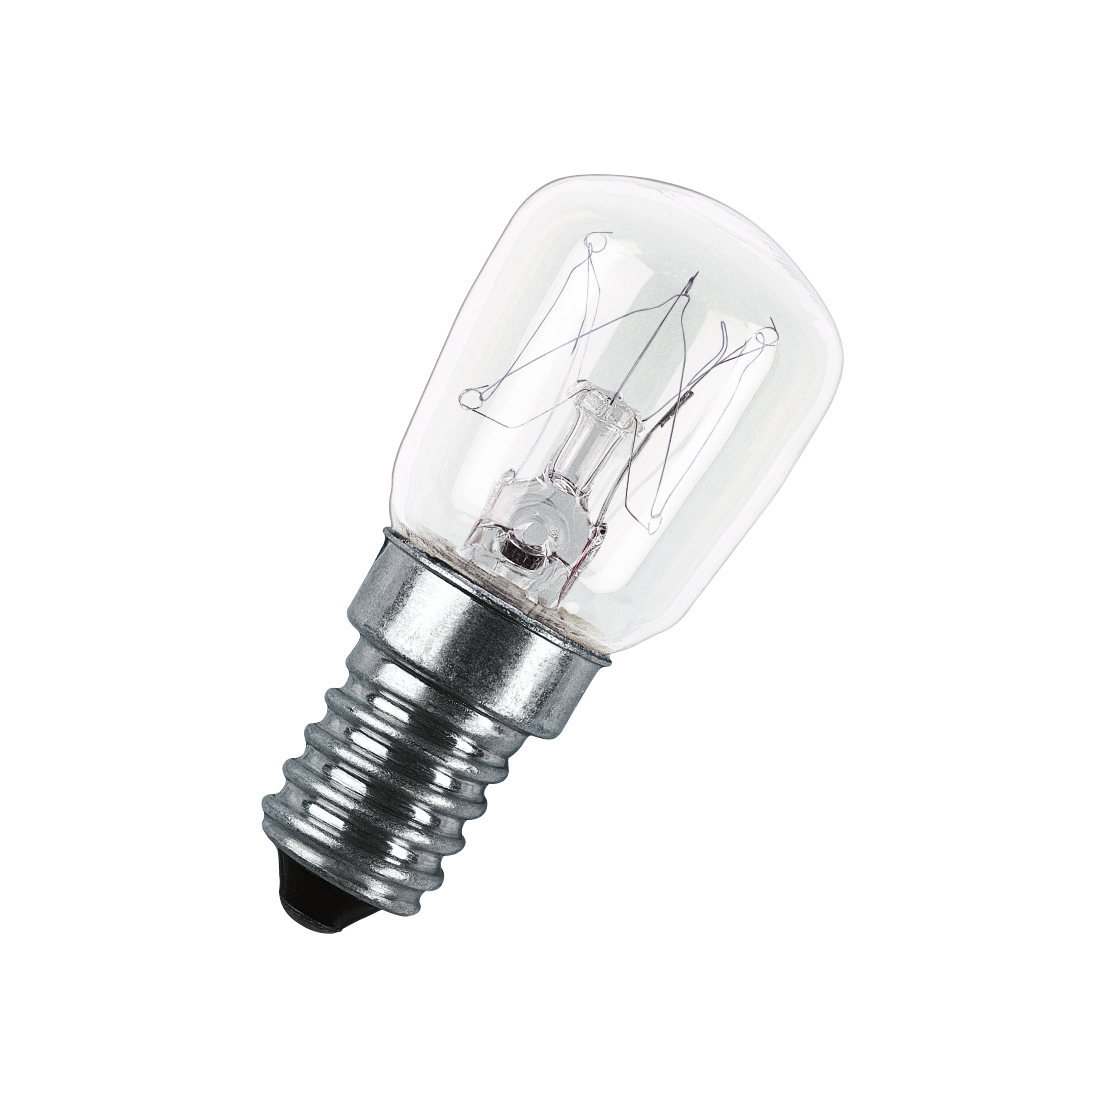 abx Druckfähige Abbildung - Xavax, Kühlgerätelampe, 25W, E14, Birnchenform, klar